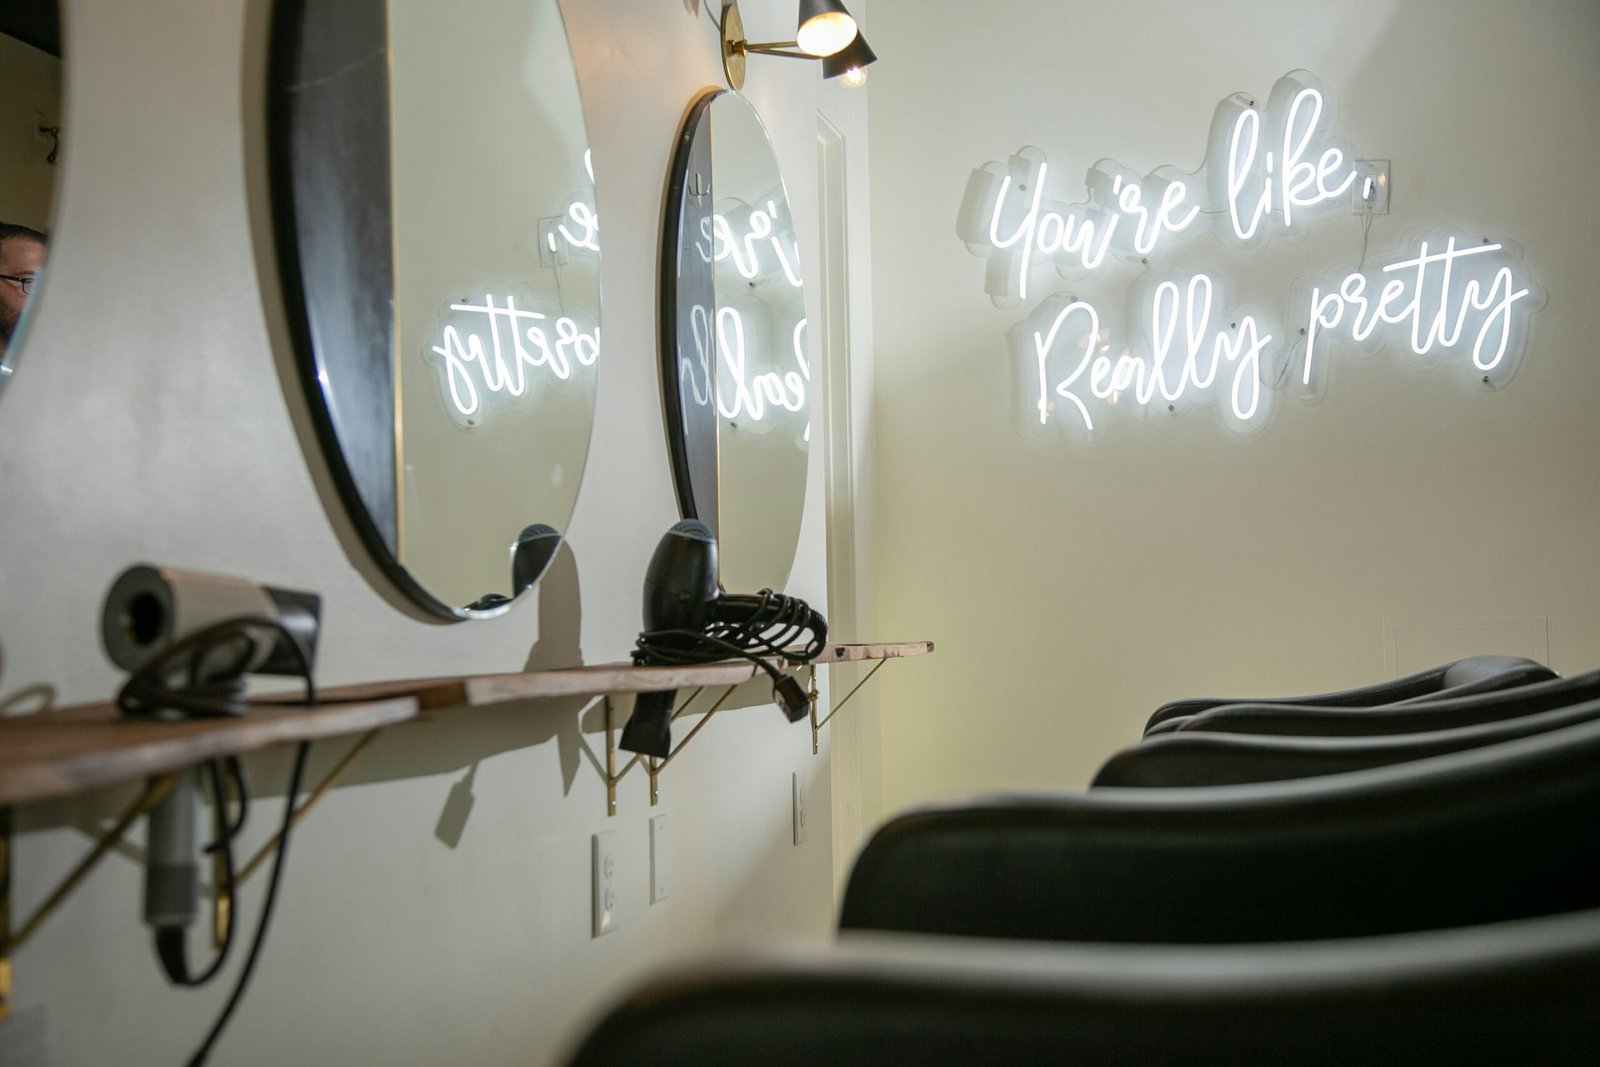 Los Angeles best hair salons guide inside salon sign